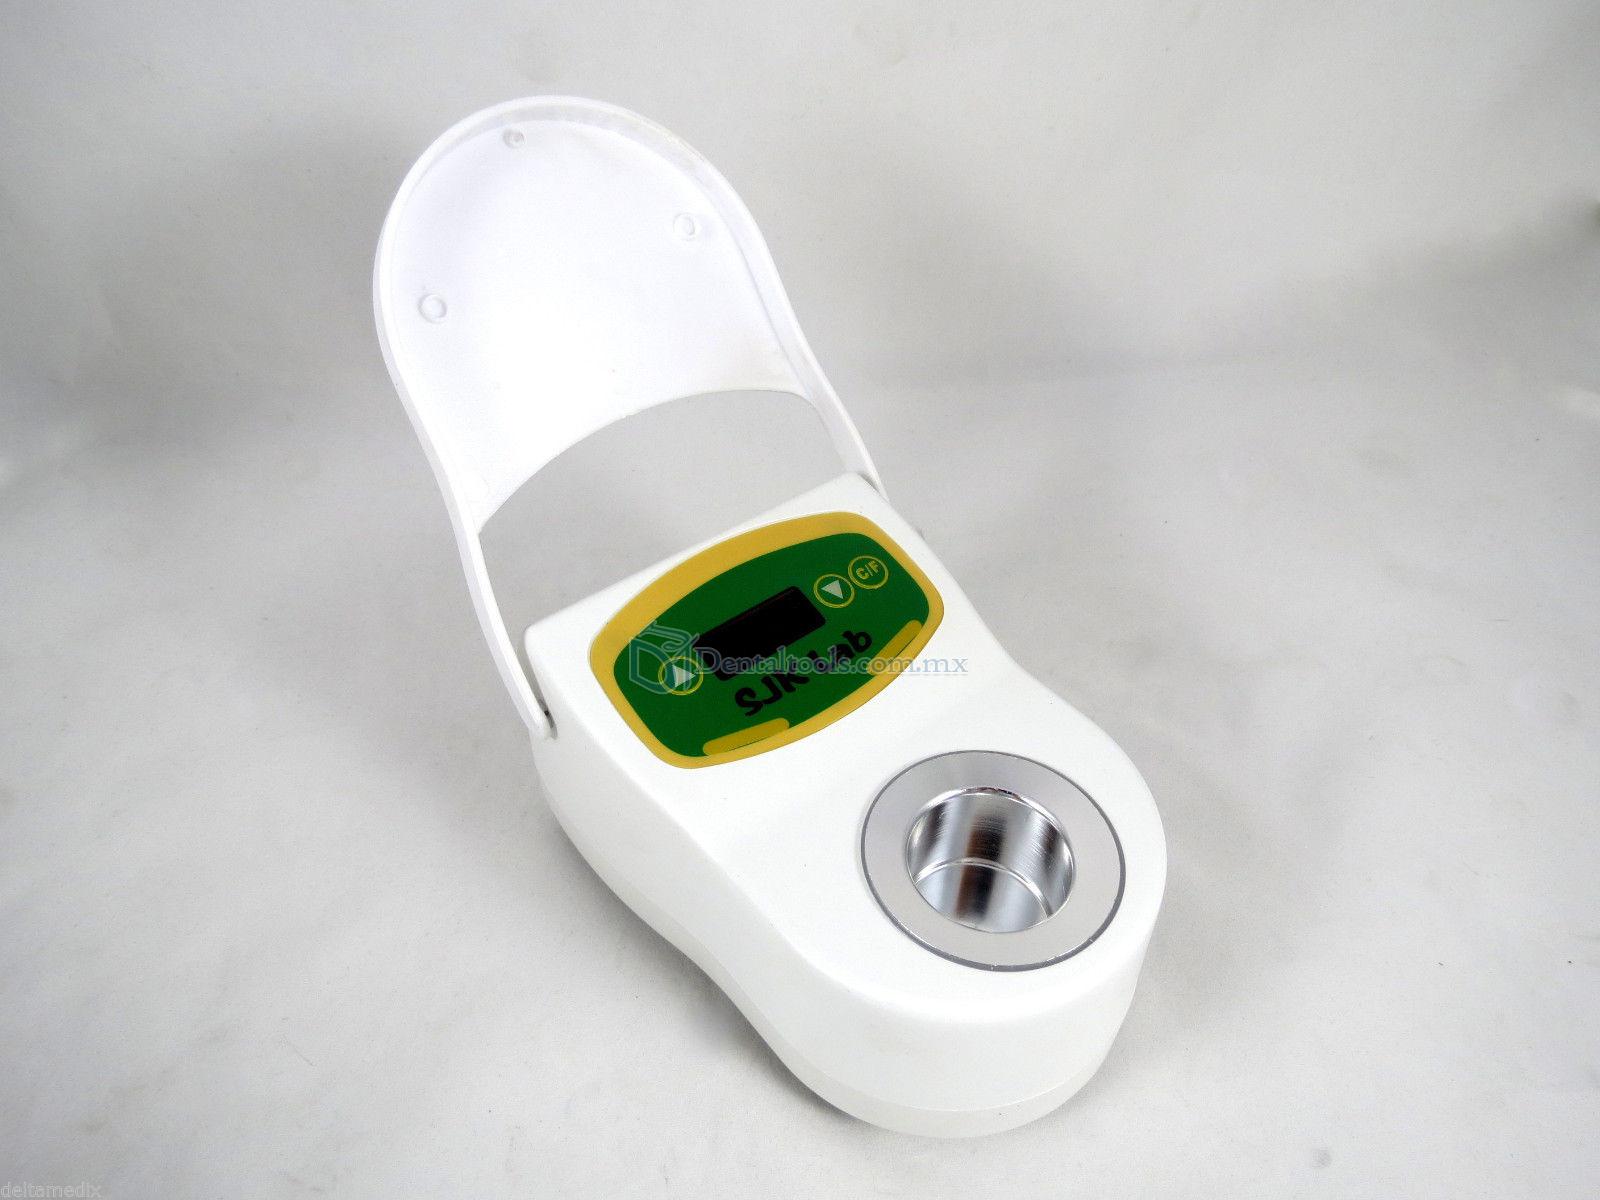 SJK Dental Digital Pantalla LED de inmersión cera calentador de olla